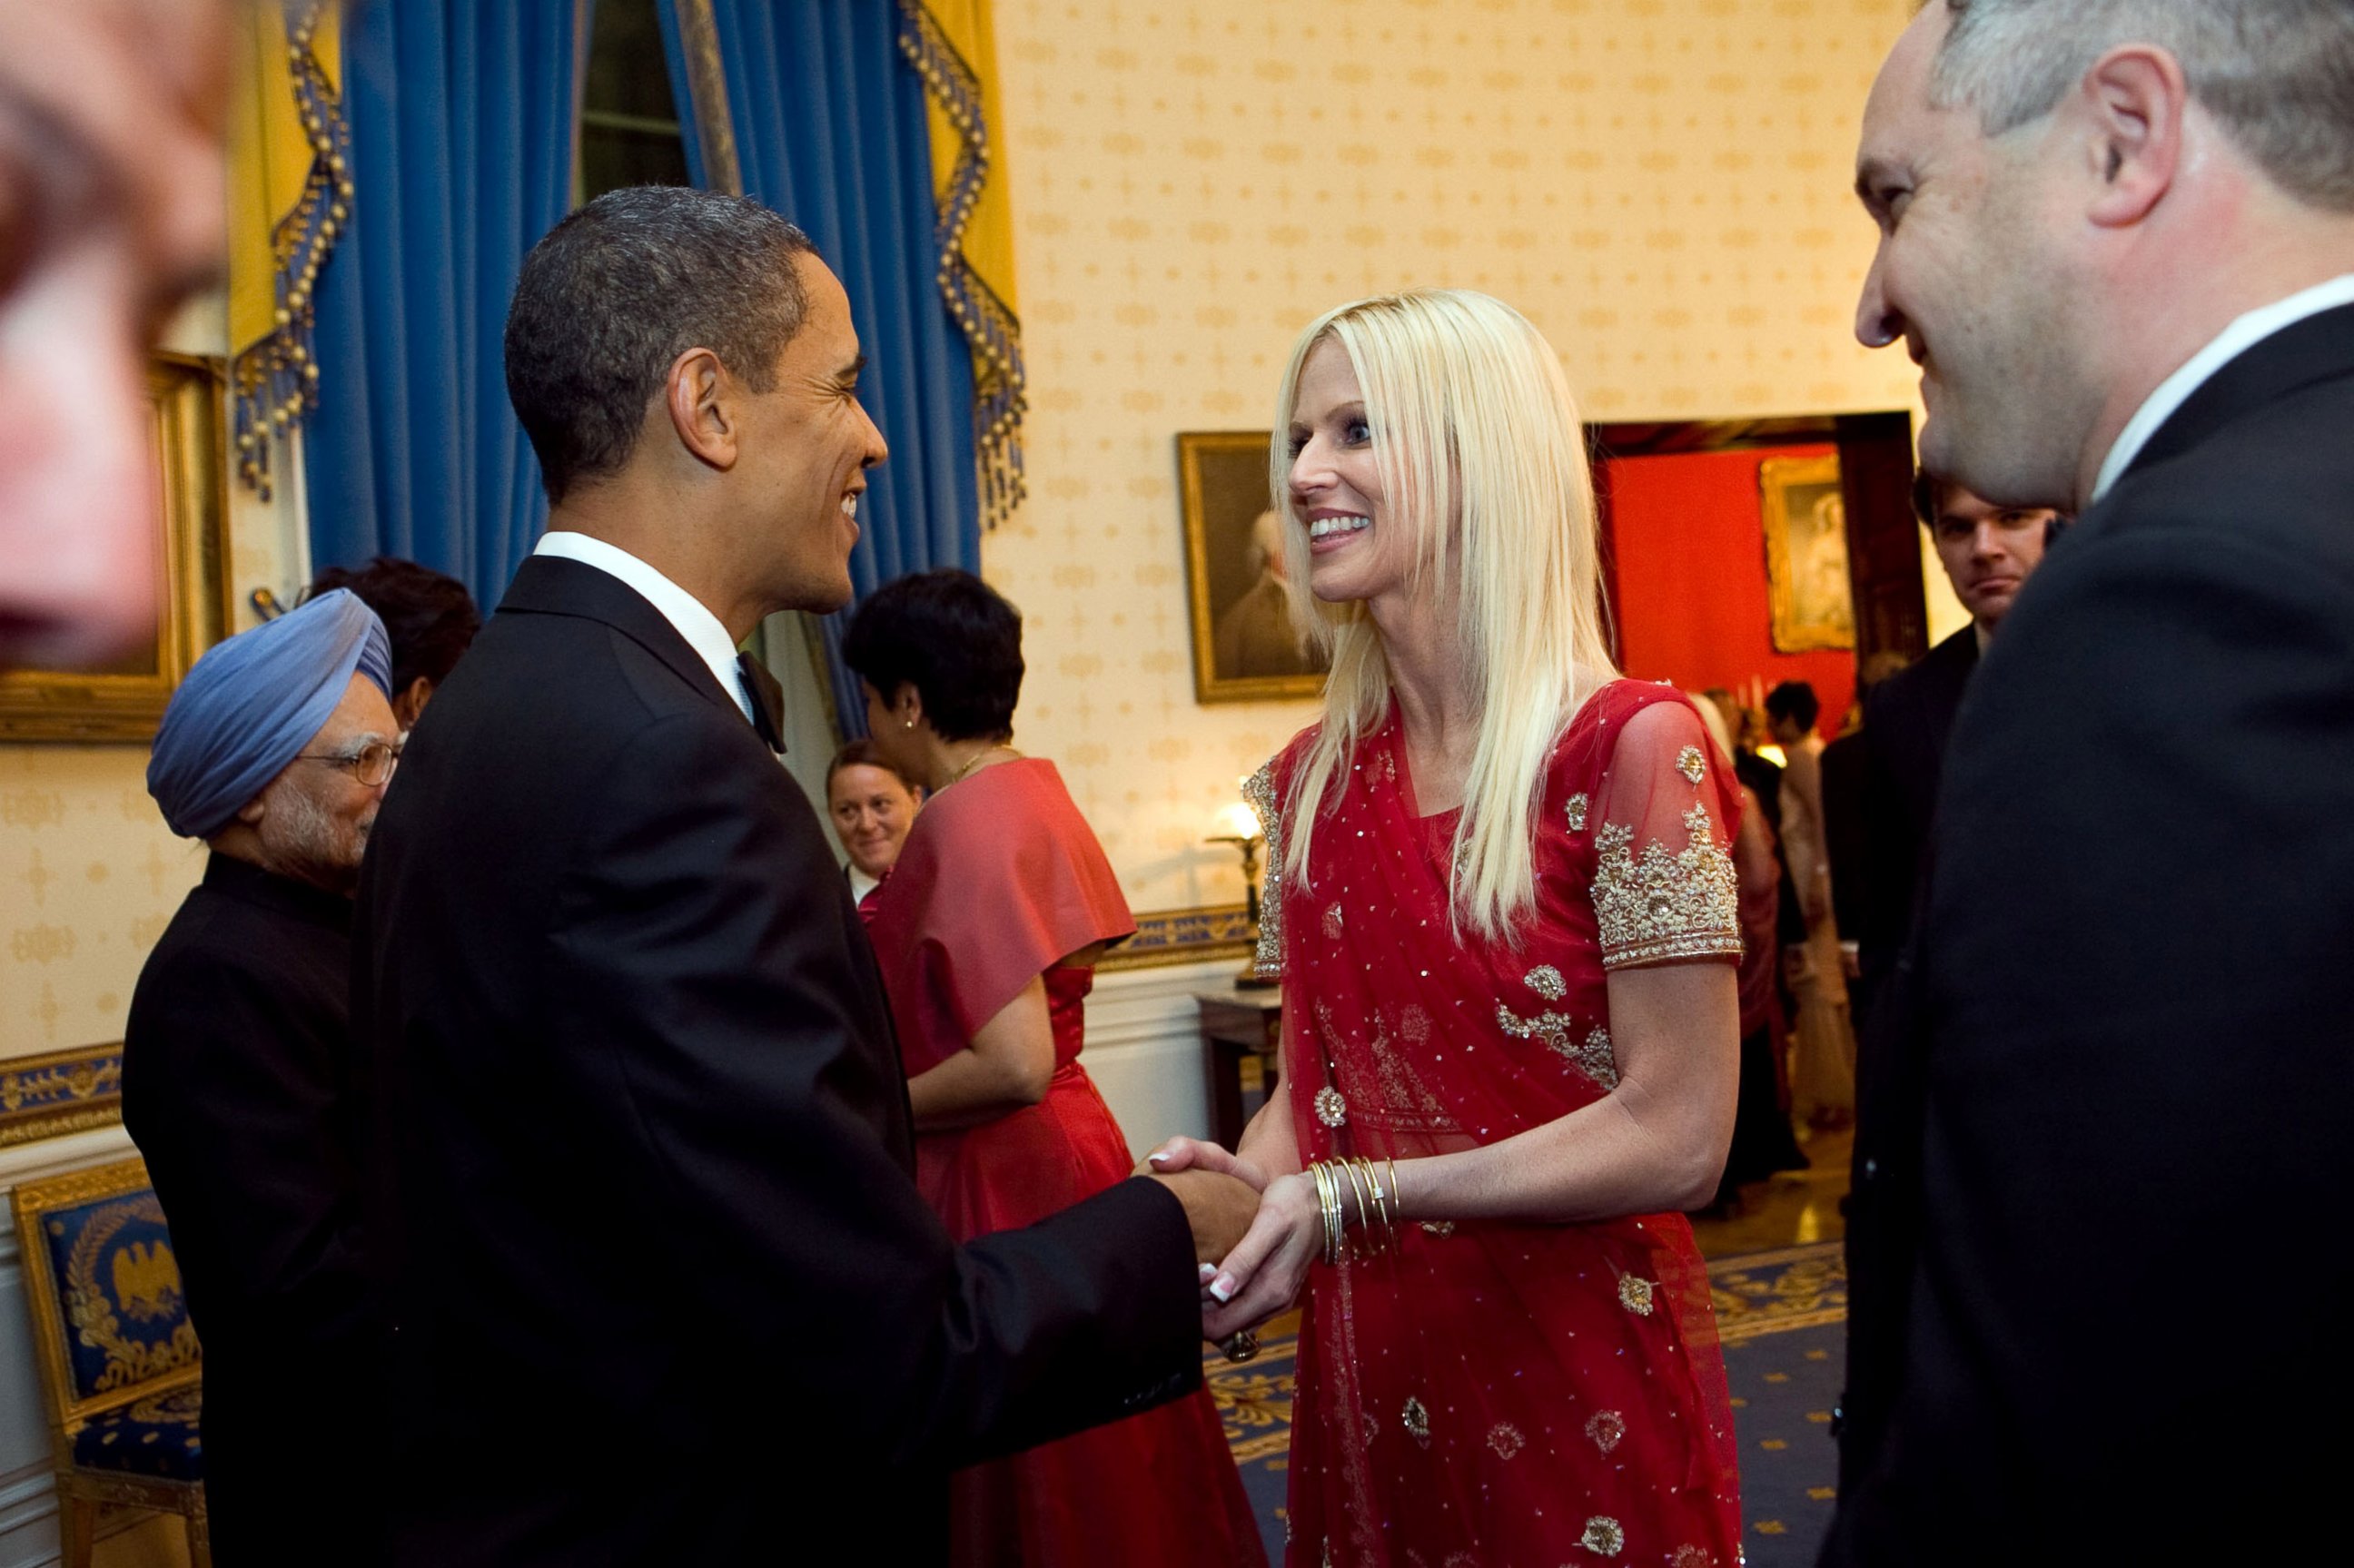 PHOTO: President Barack Obama greets Michaele and Tareq Salahi at the White House State Dinner